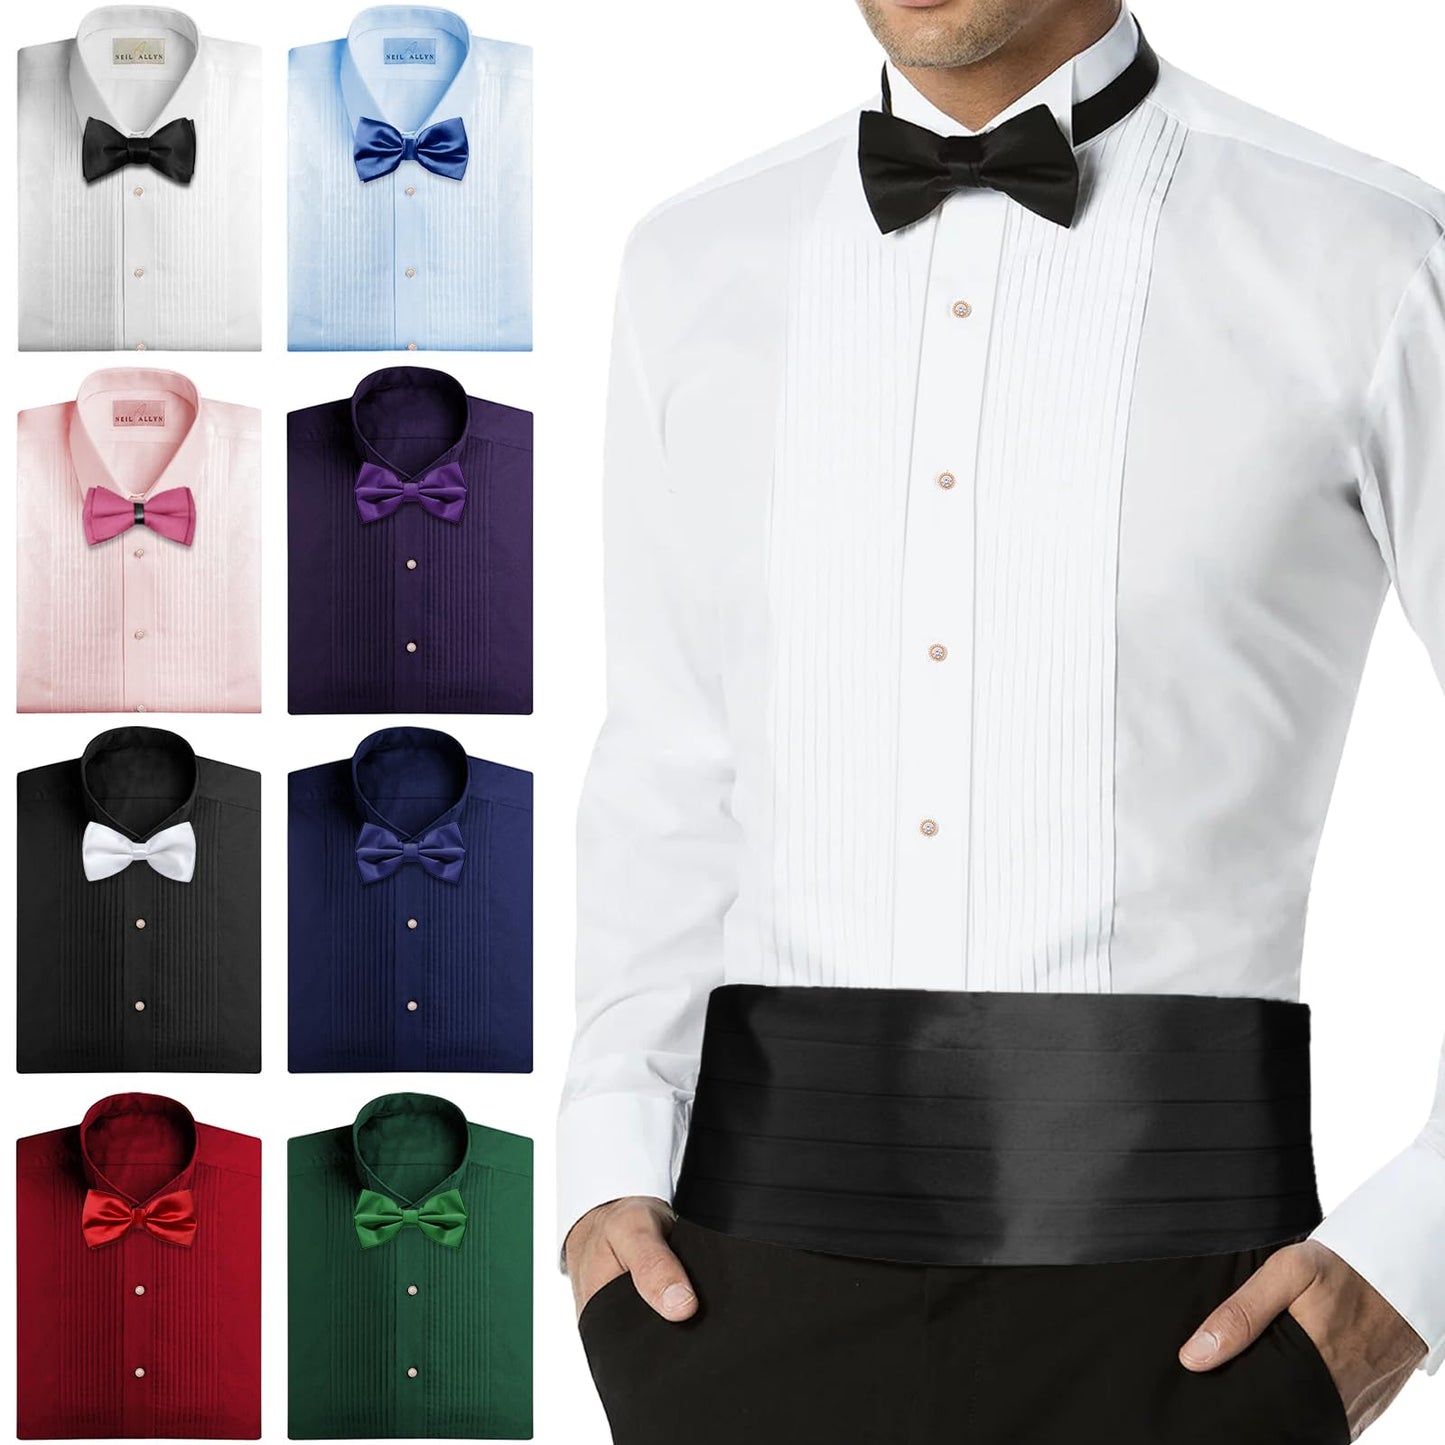 Crystal Tuxedo Studs for Mens Tuxedo Shirt,5 PCS Tuxedo Buttons for Birthday Wedding Party Christmas